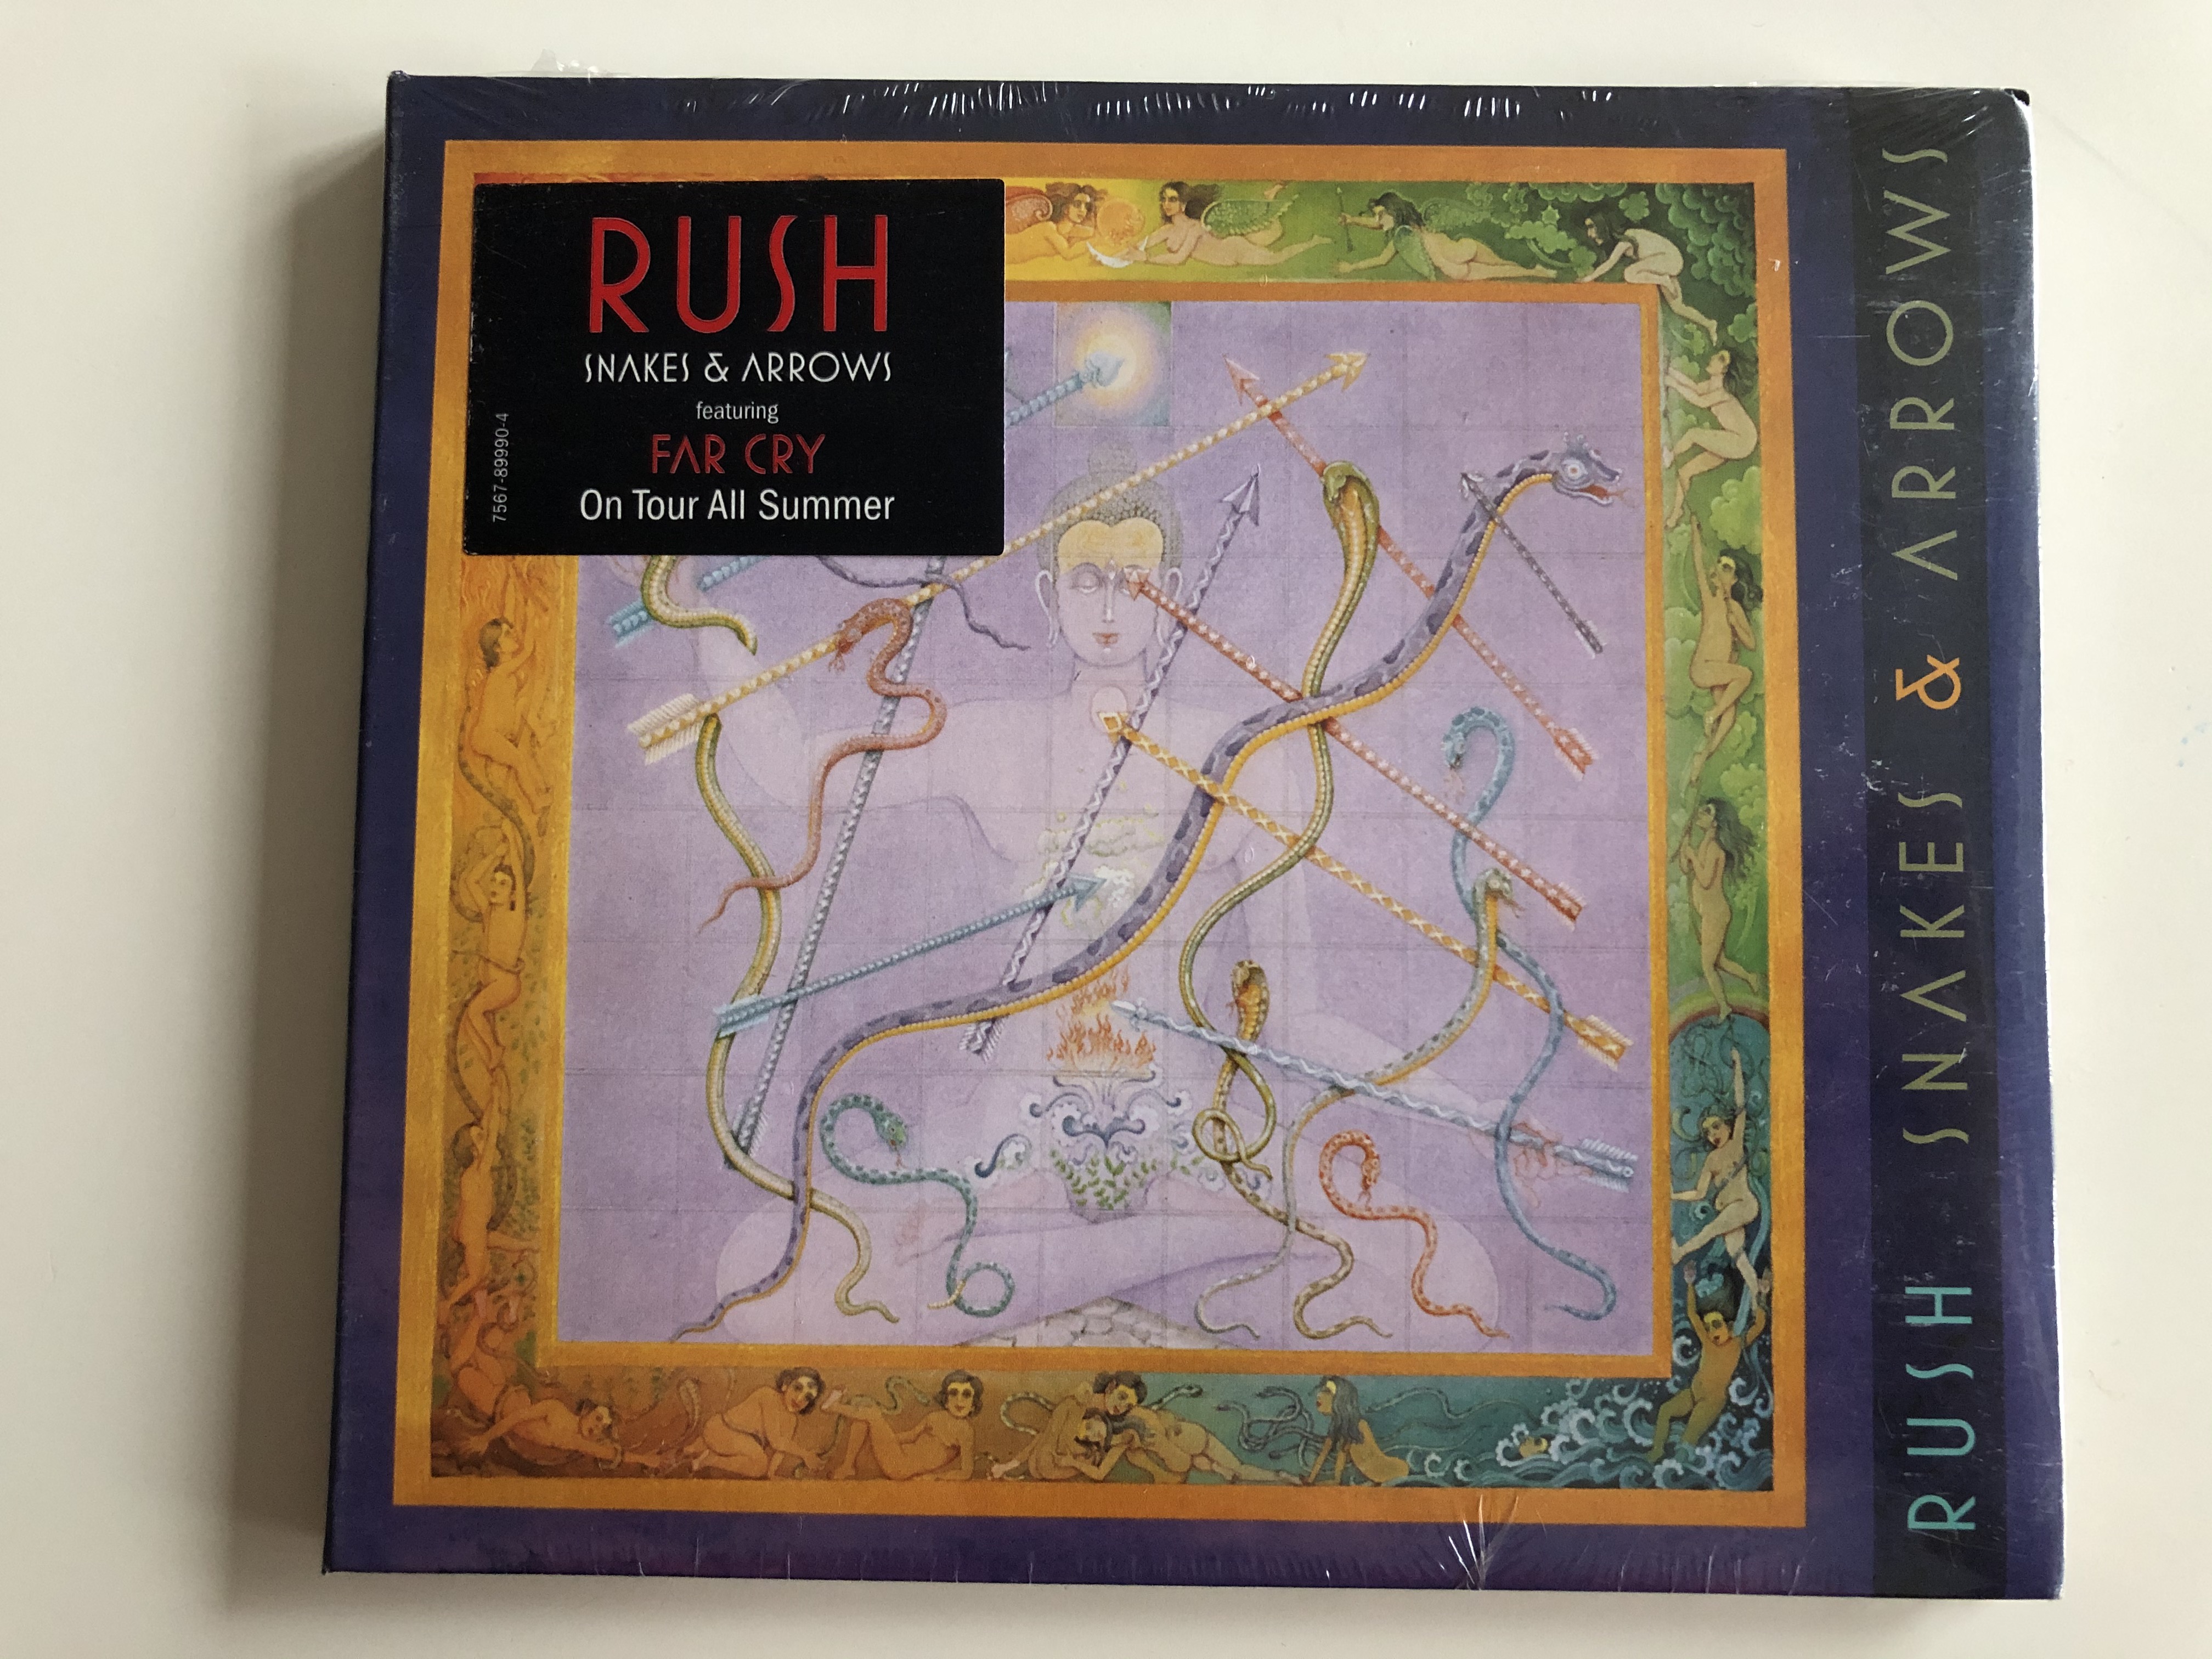 rush-snakes-arrows-featuring-far-cry-on-tour-all-summer-atlantic-audio-cd-2007-7567-89990-4-1-.jpg